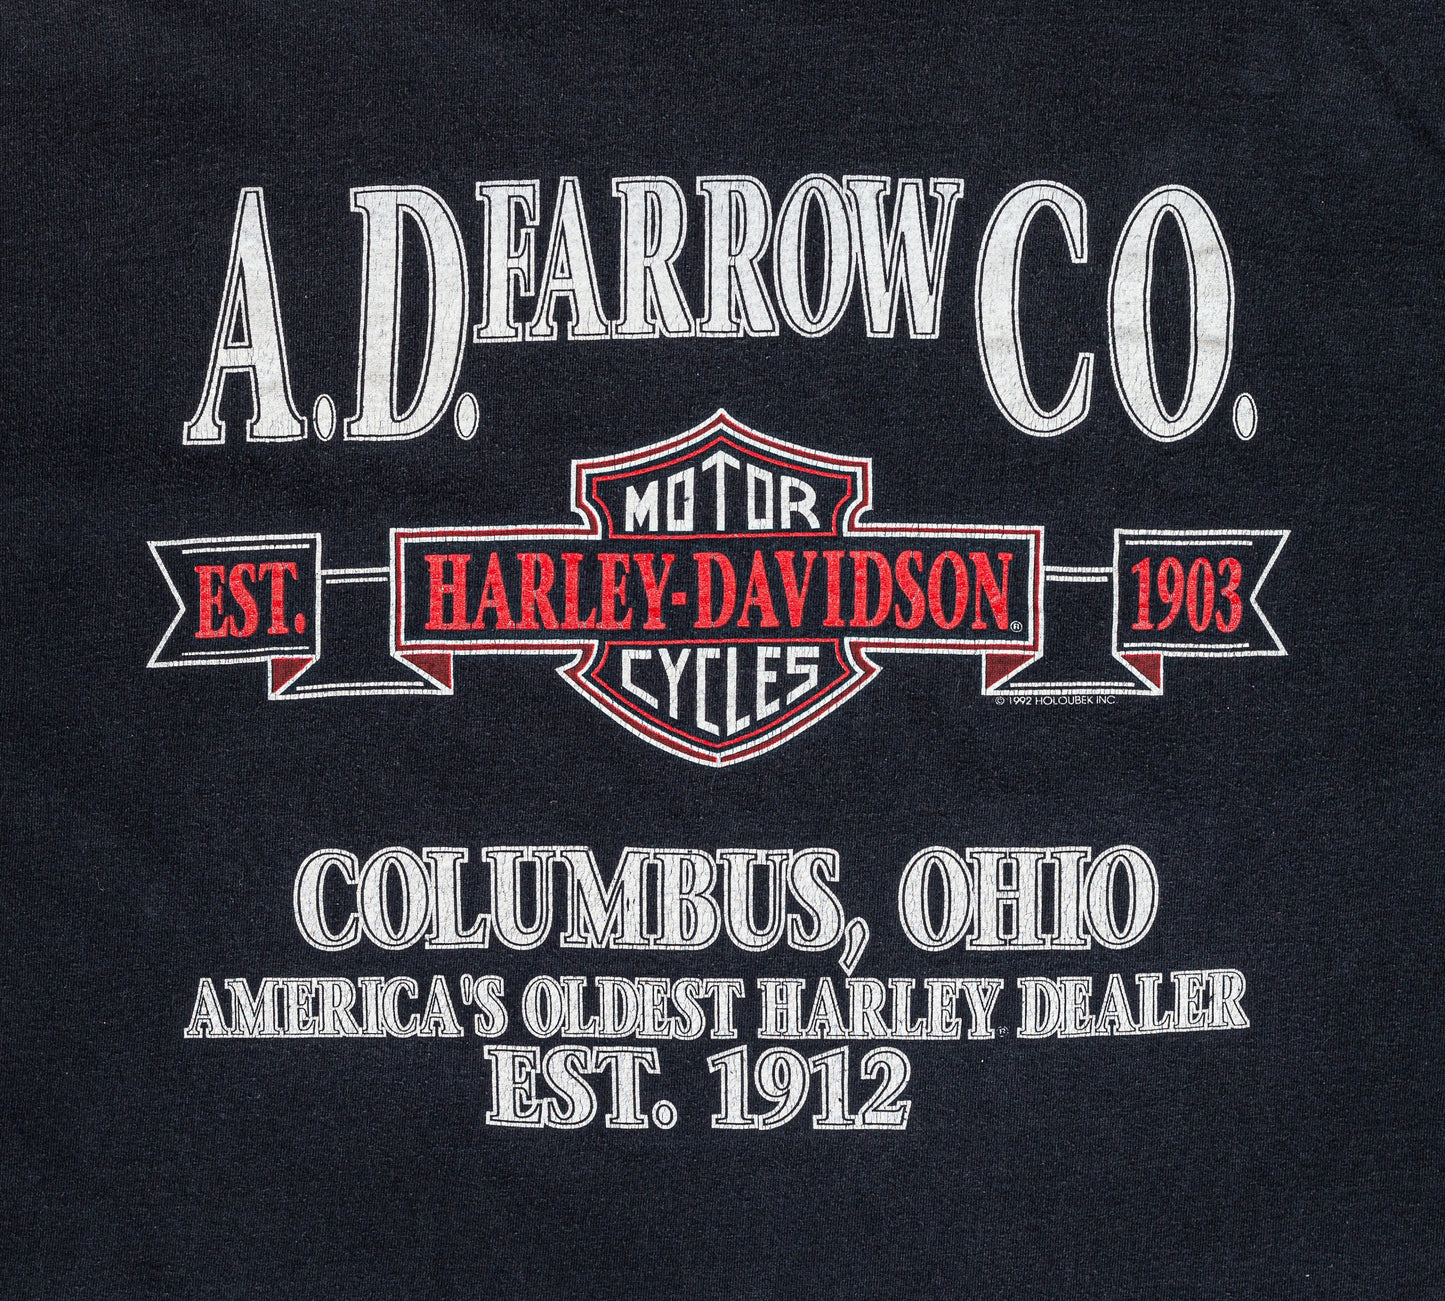 90s Harley Davidson "Accessorize Til It Hurts" T Shirt - Men's XXL 